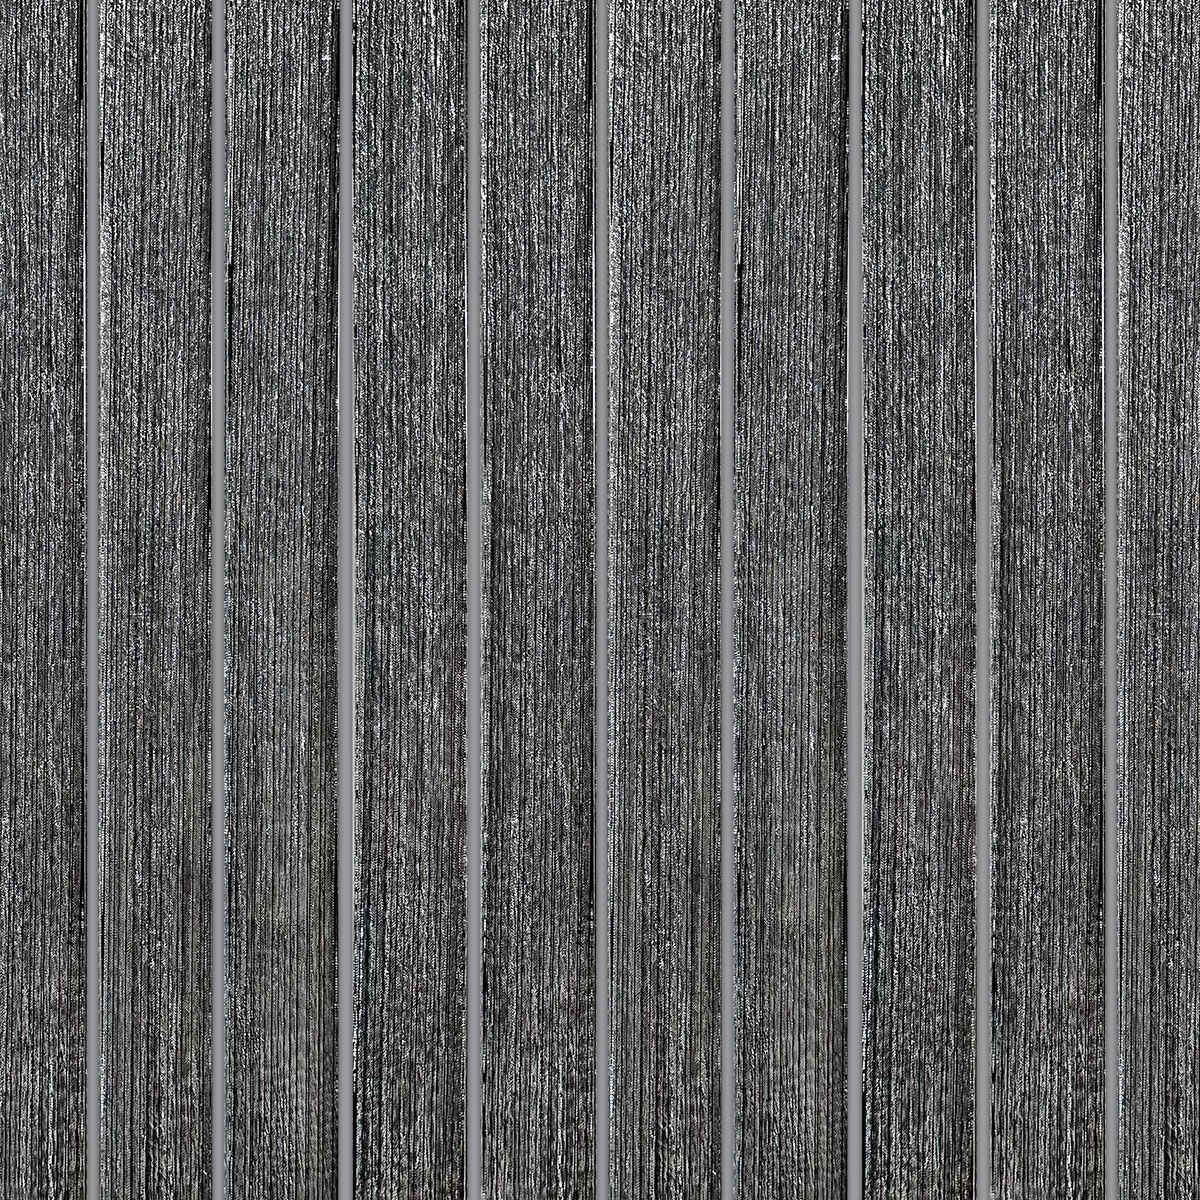 Shimmery Black Glass Modern Backsplash Tile BA8021 10